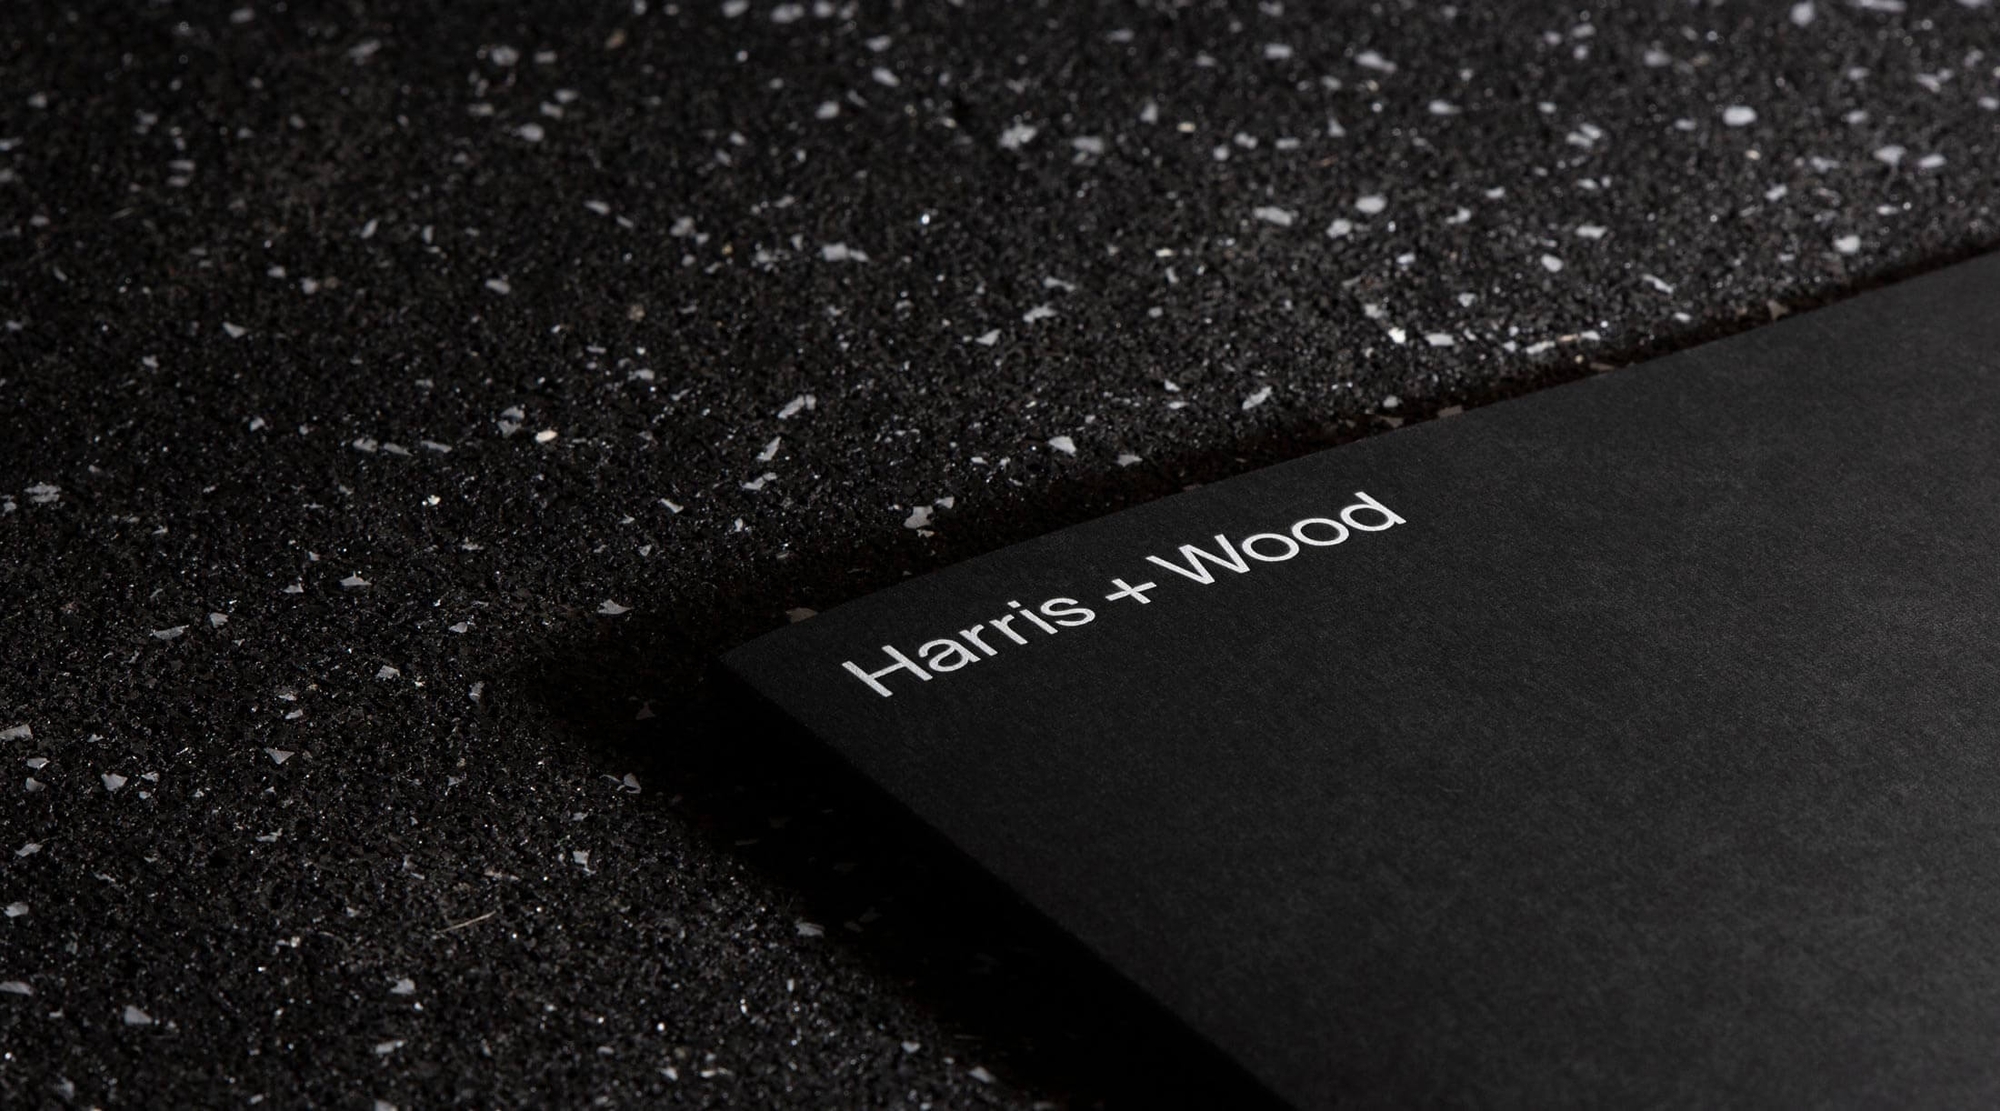 Harris Wood Real Estate - Brand and Website - Brochure Cover Logo | Atollon - a design company